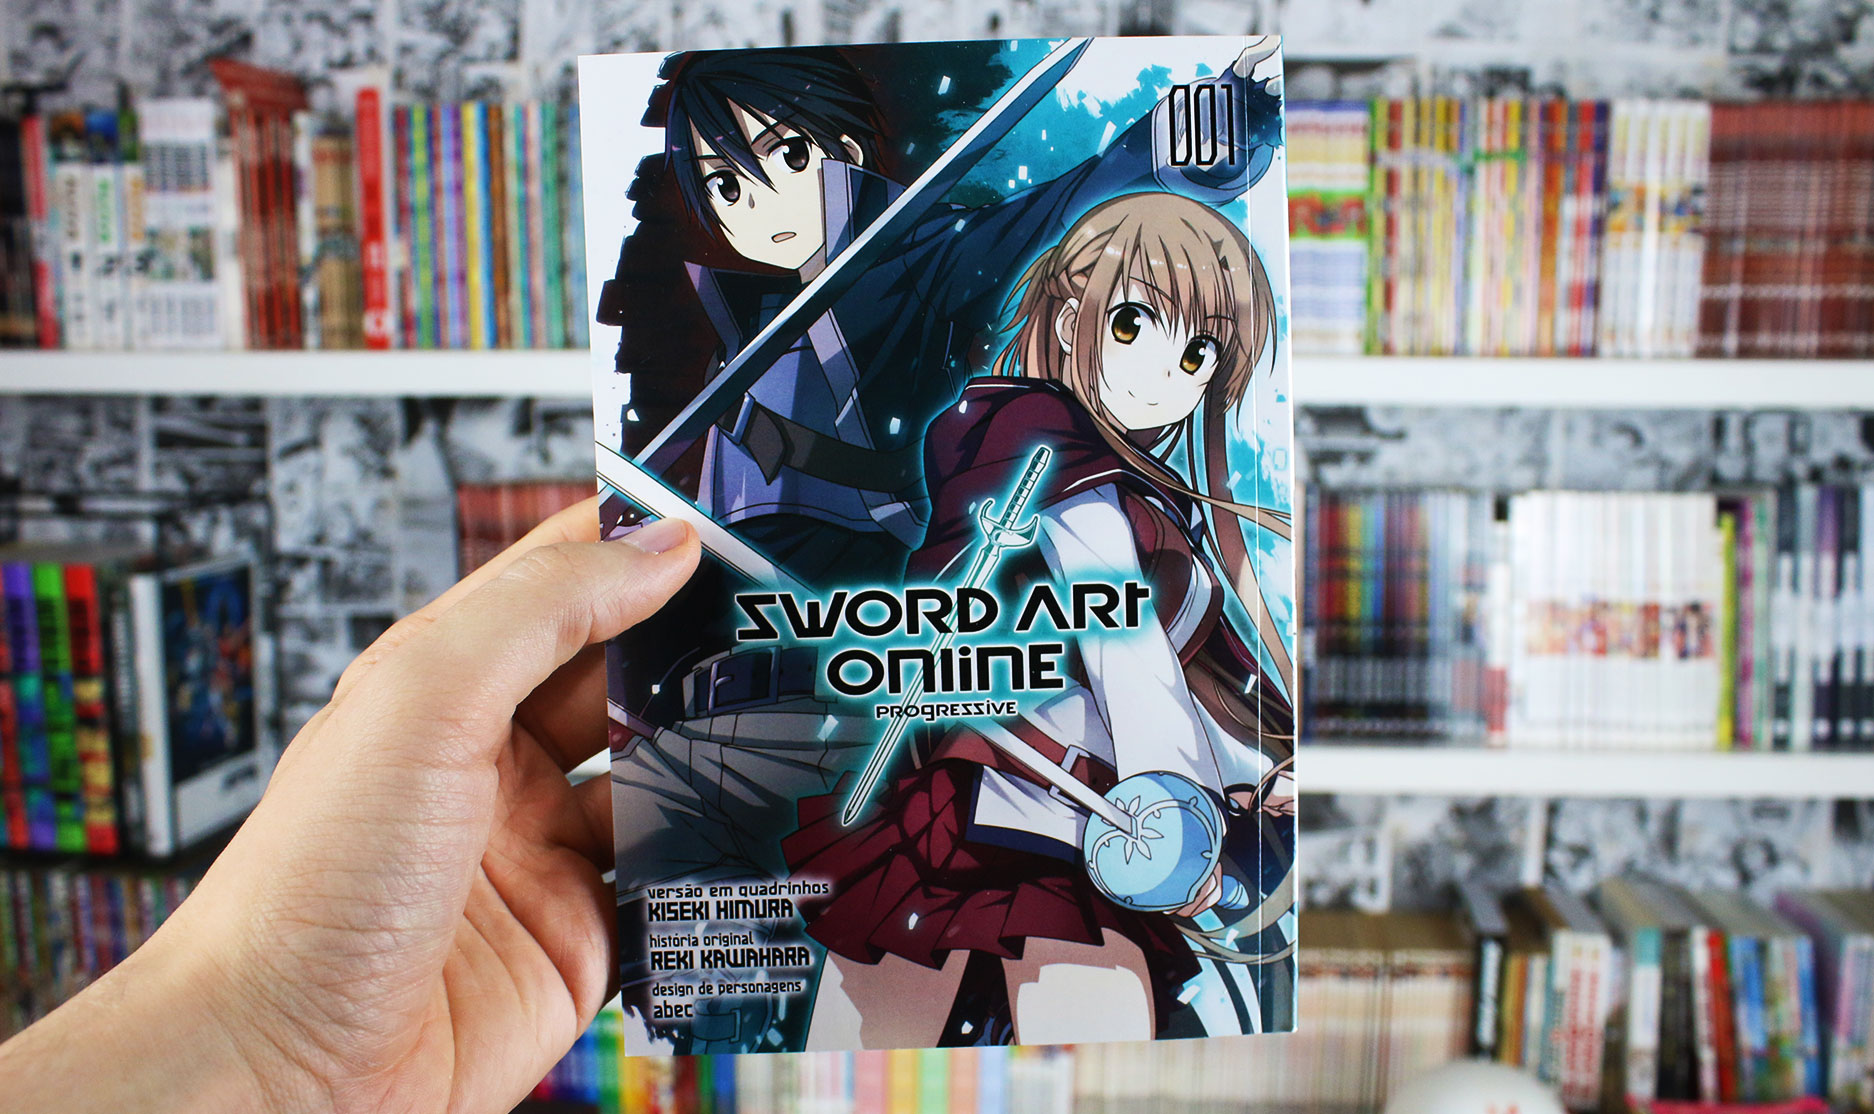 Sword Art Online Progressive, Volume 3 - (Sword Art Online Progressive  Manga) by Reki Kawahara (Paperback)